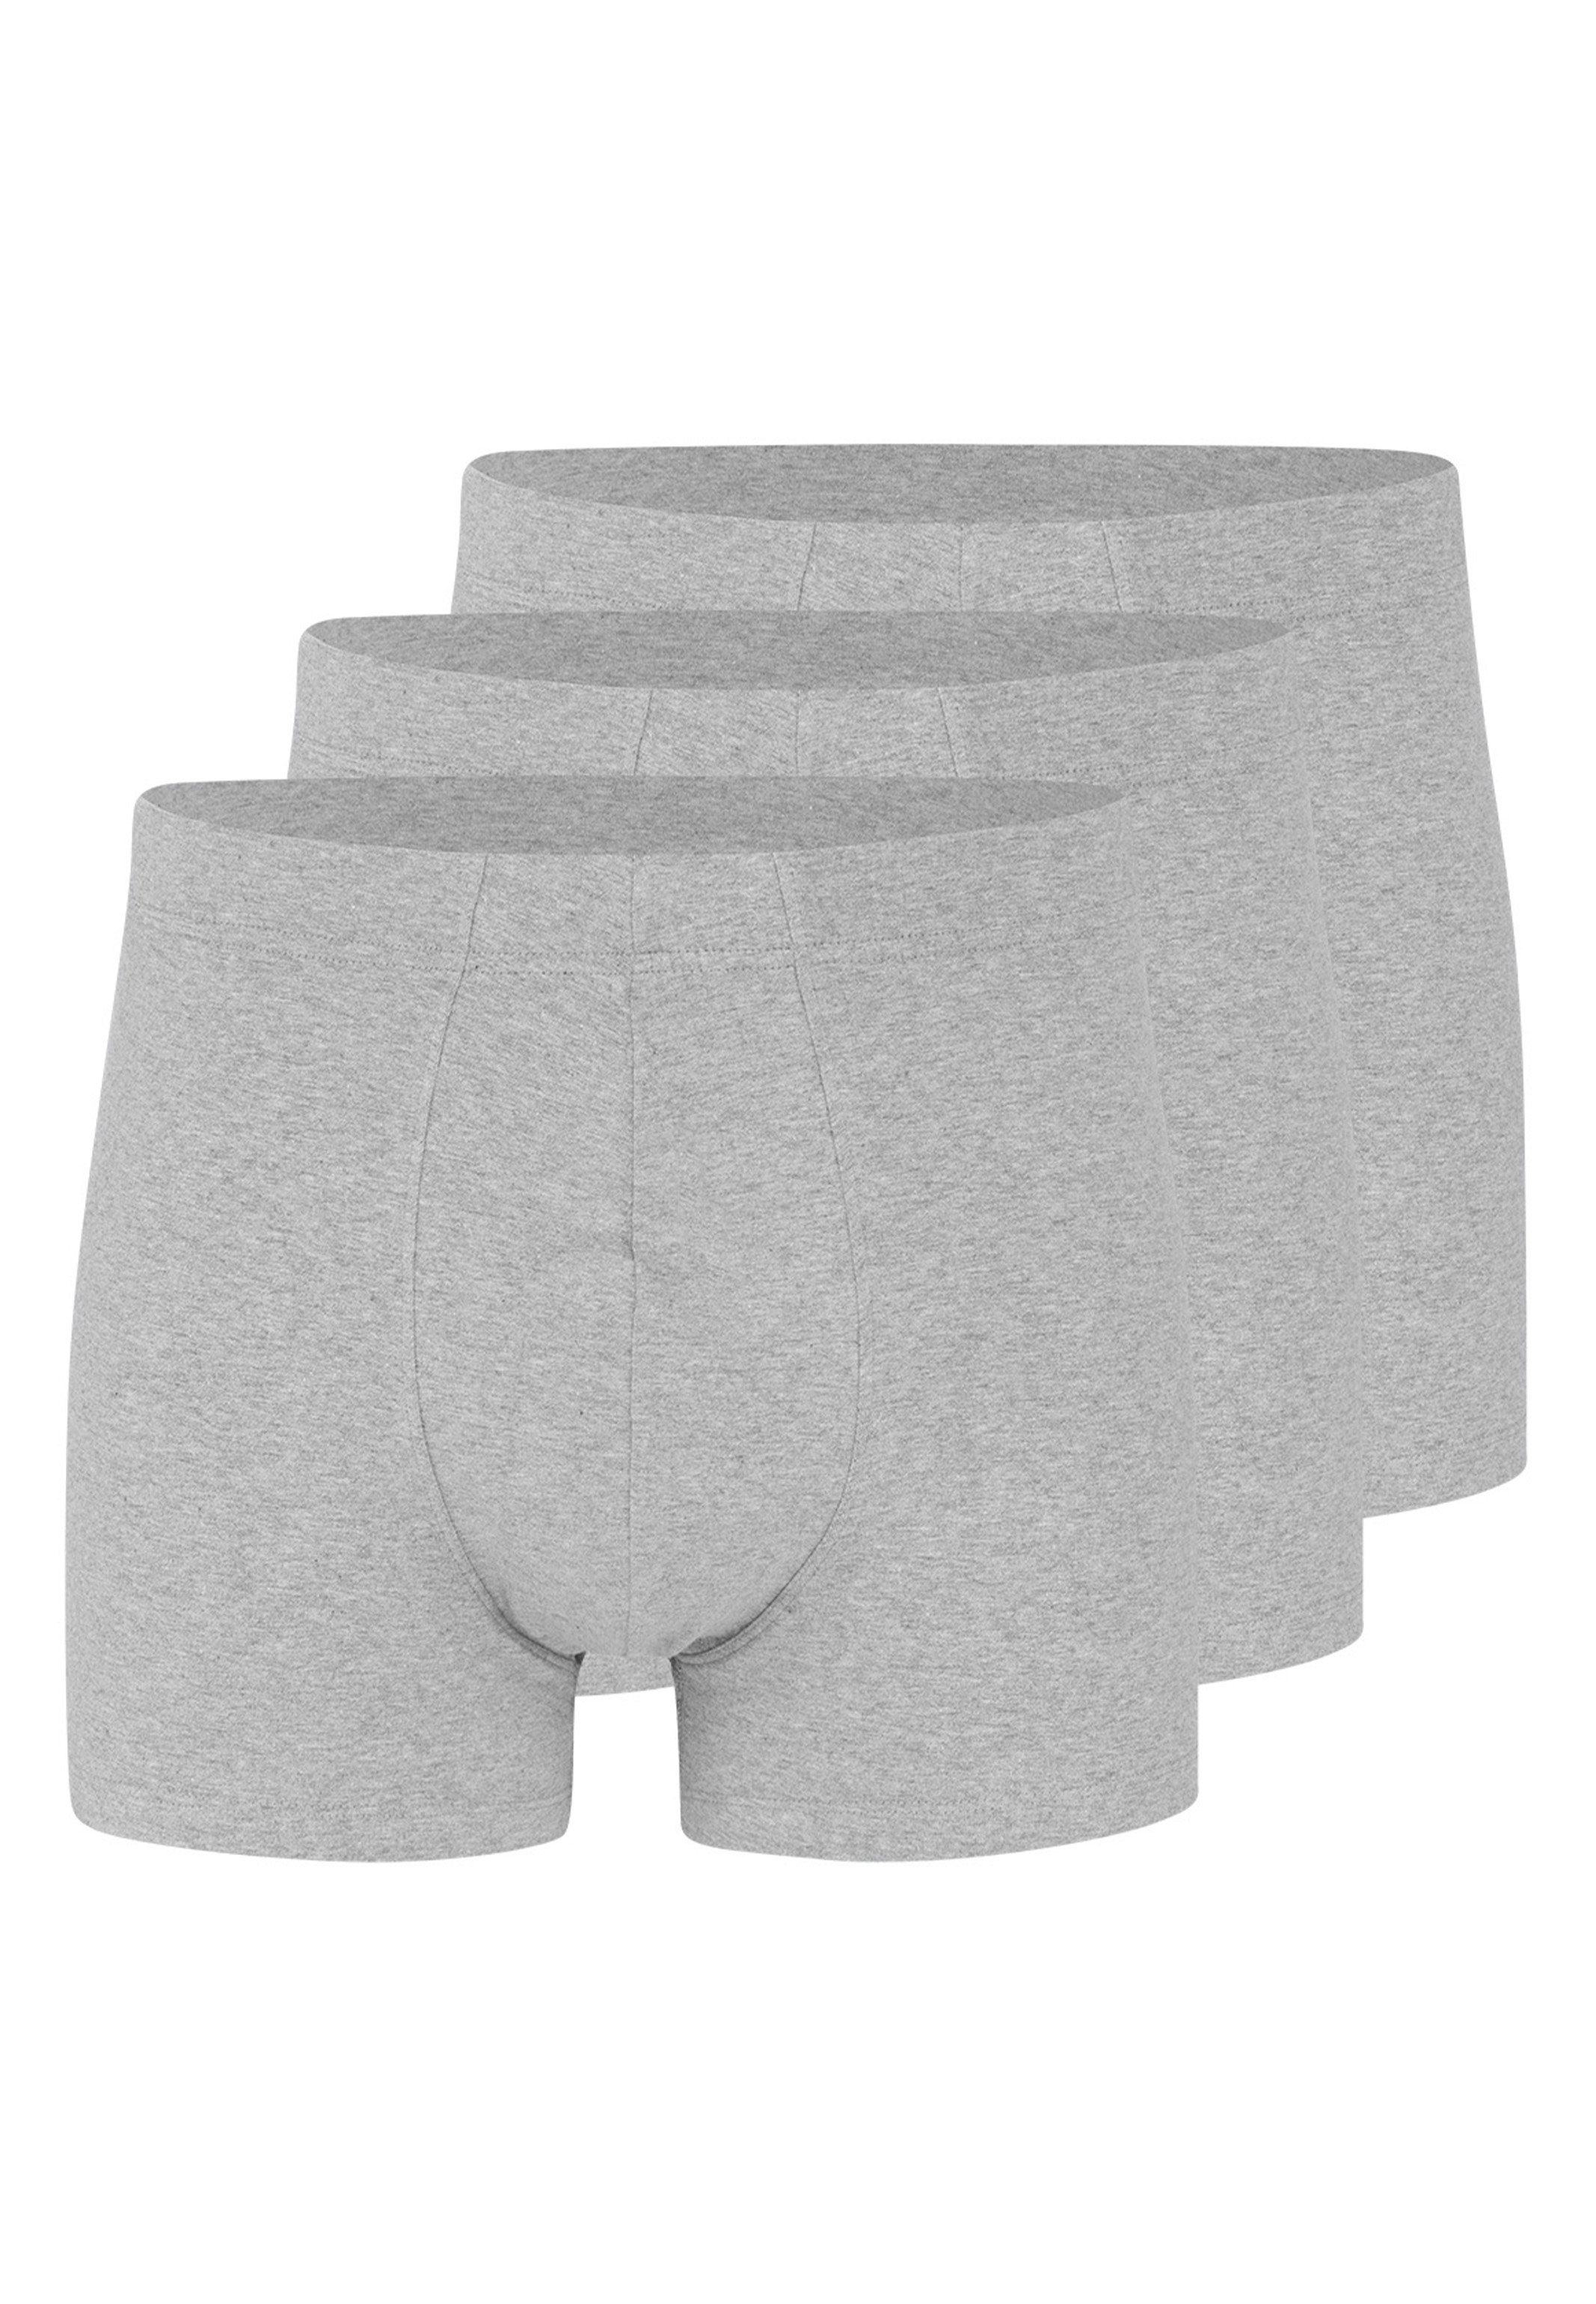 Almonu Retro Boxer 3er Pack Organic Cotton - Melange (Spar-Set, 3-St) Retro Short / Pant - Baumwolle - Ohne Eingriff - Atmungsaktiv Grau Melange